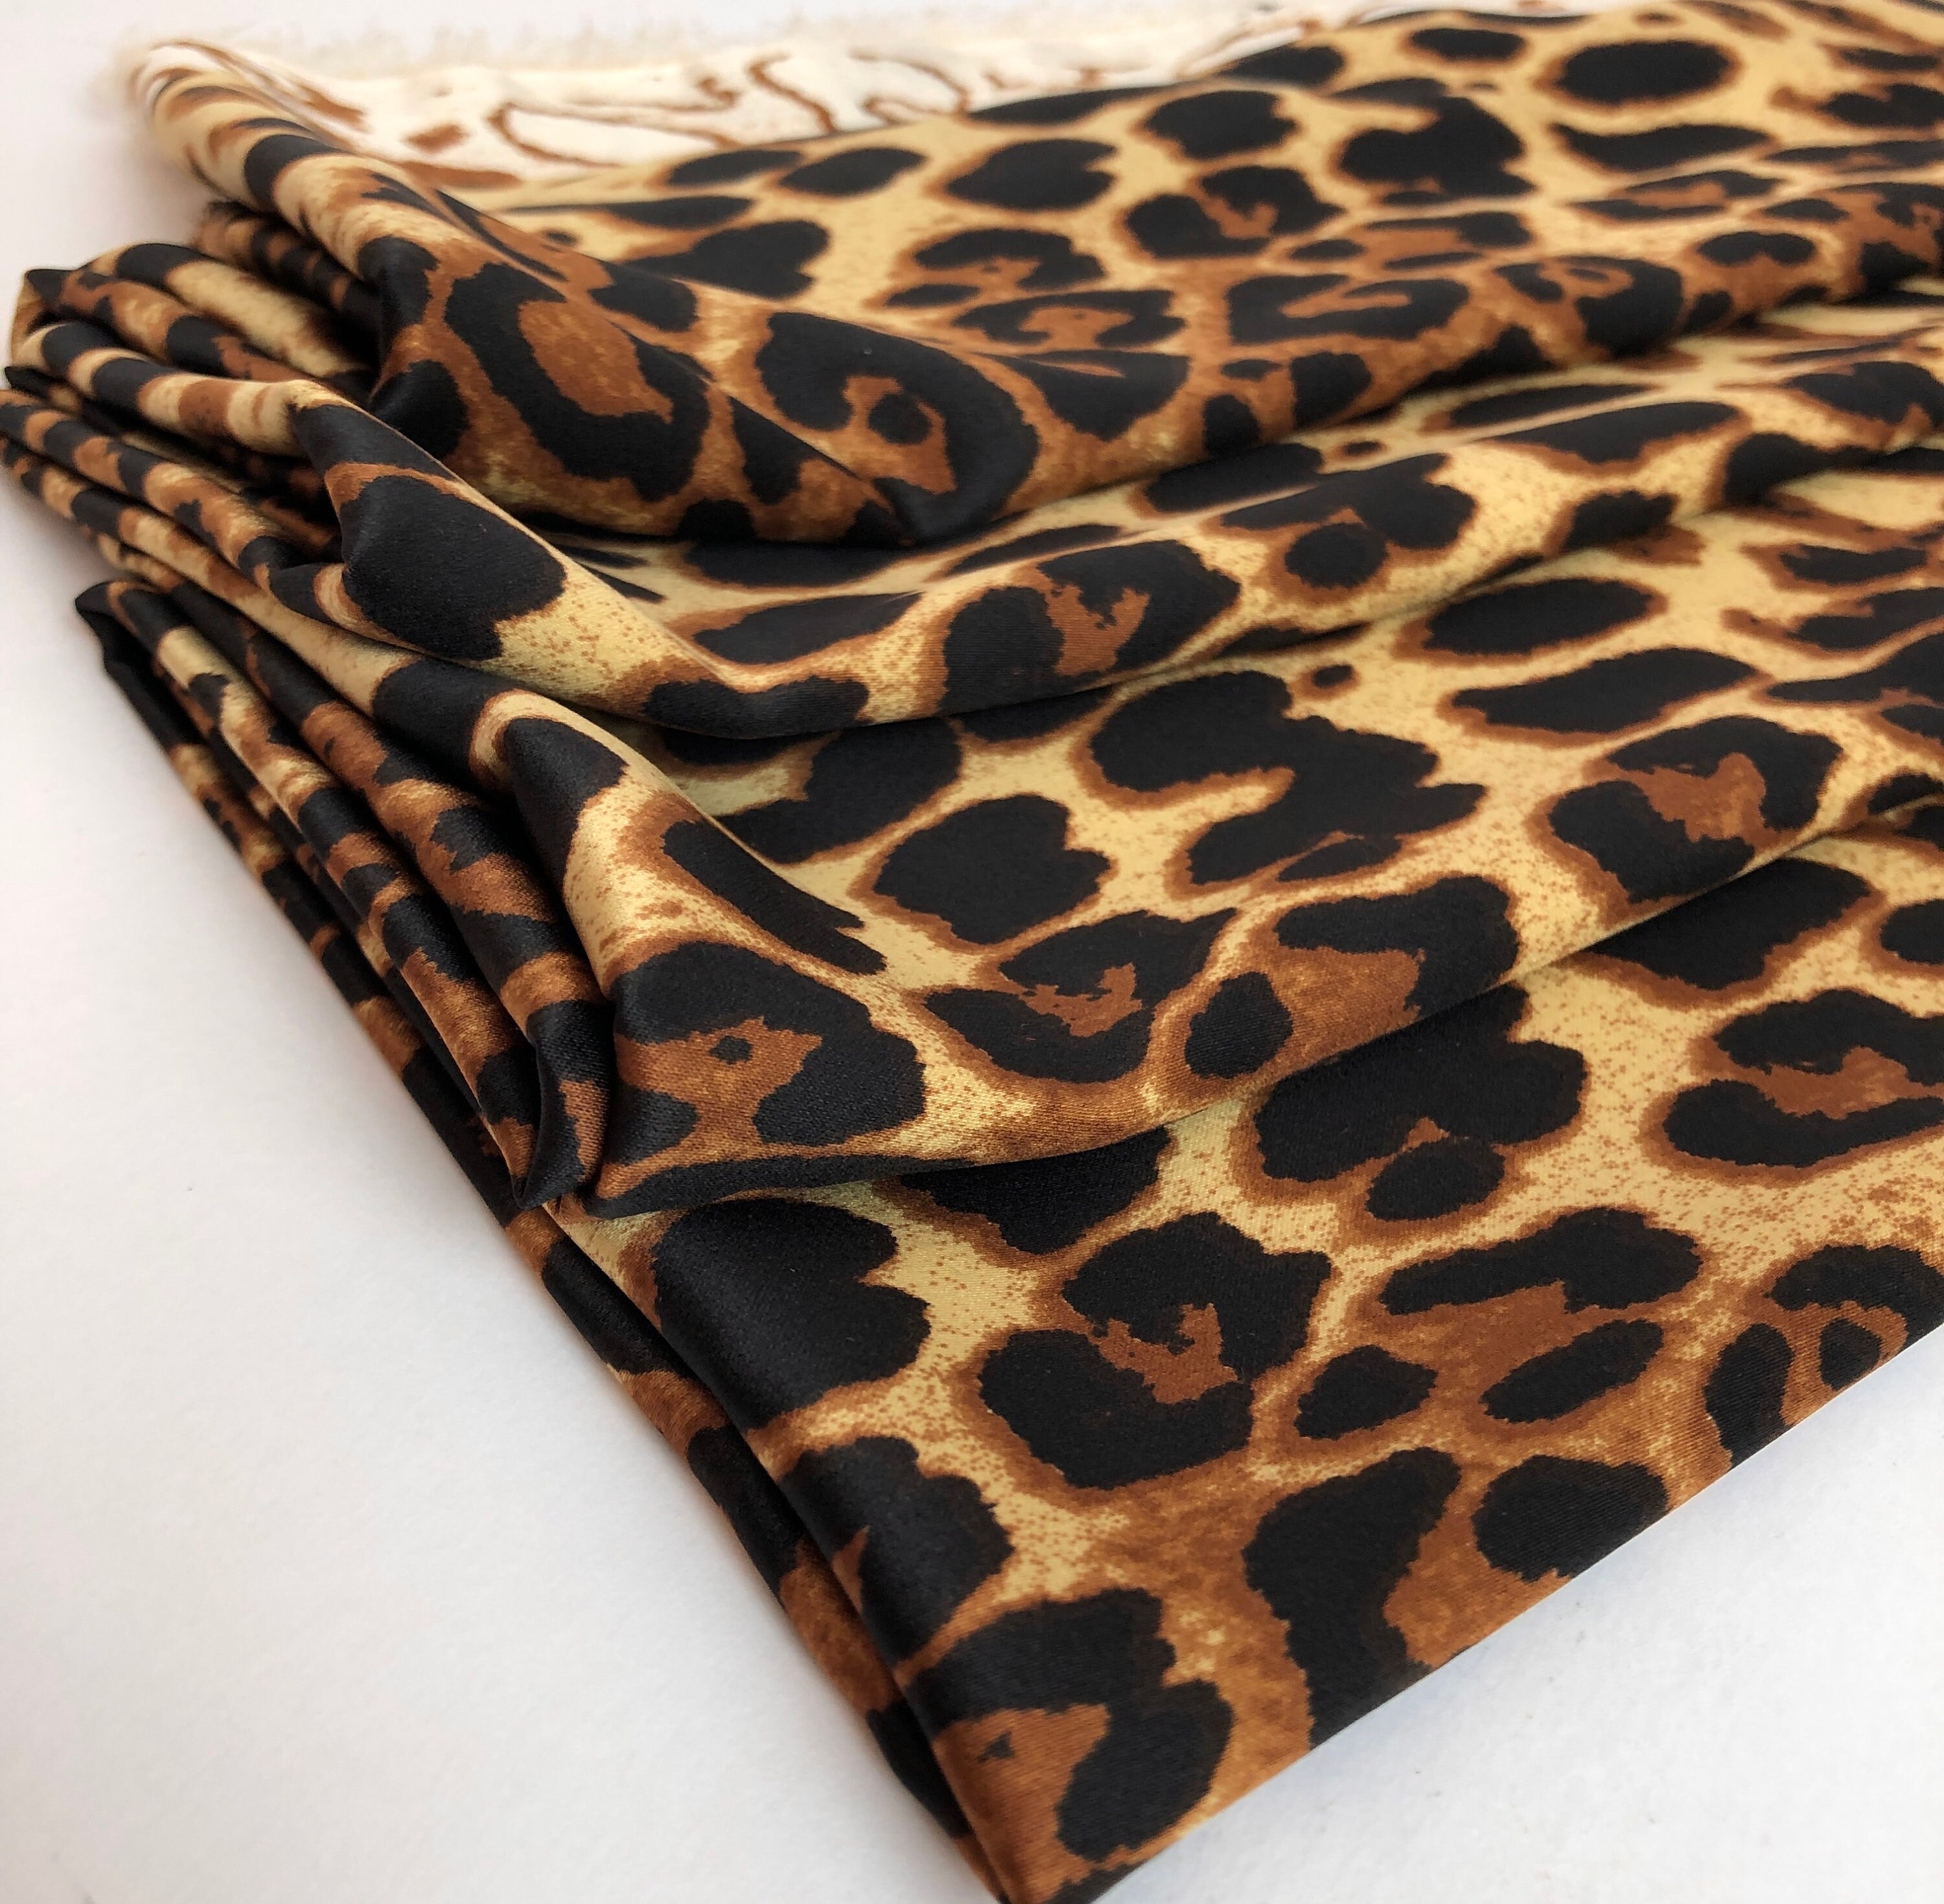 Leopard print fabric silk satin fabric by the yard | Etsy